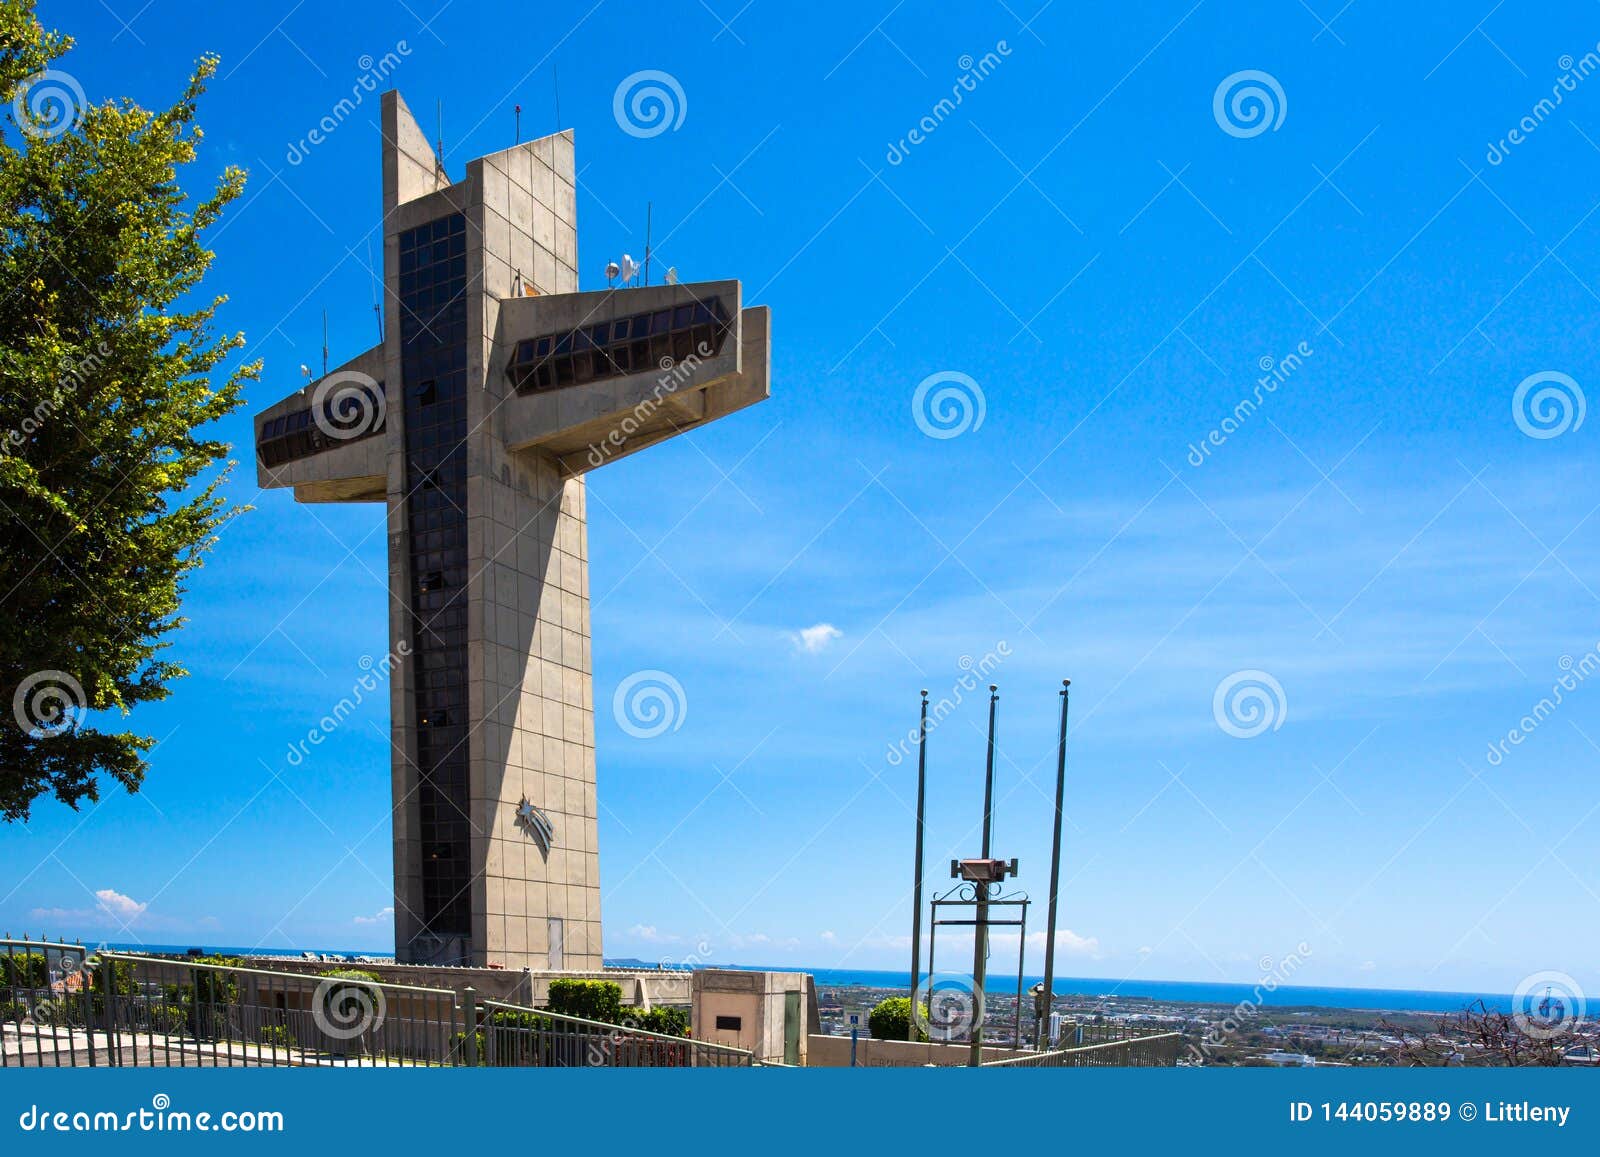 ponce puerto rico view of cerro del vigia crucifix